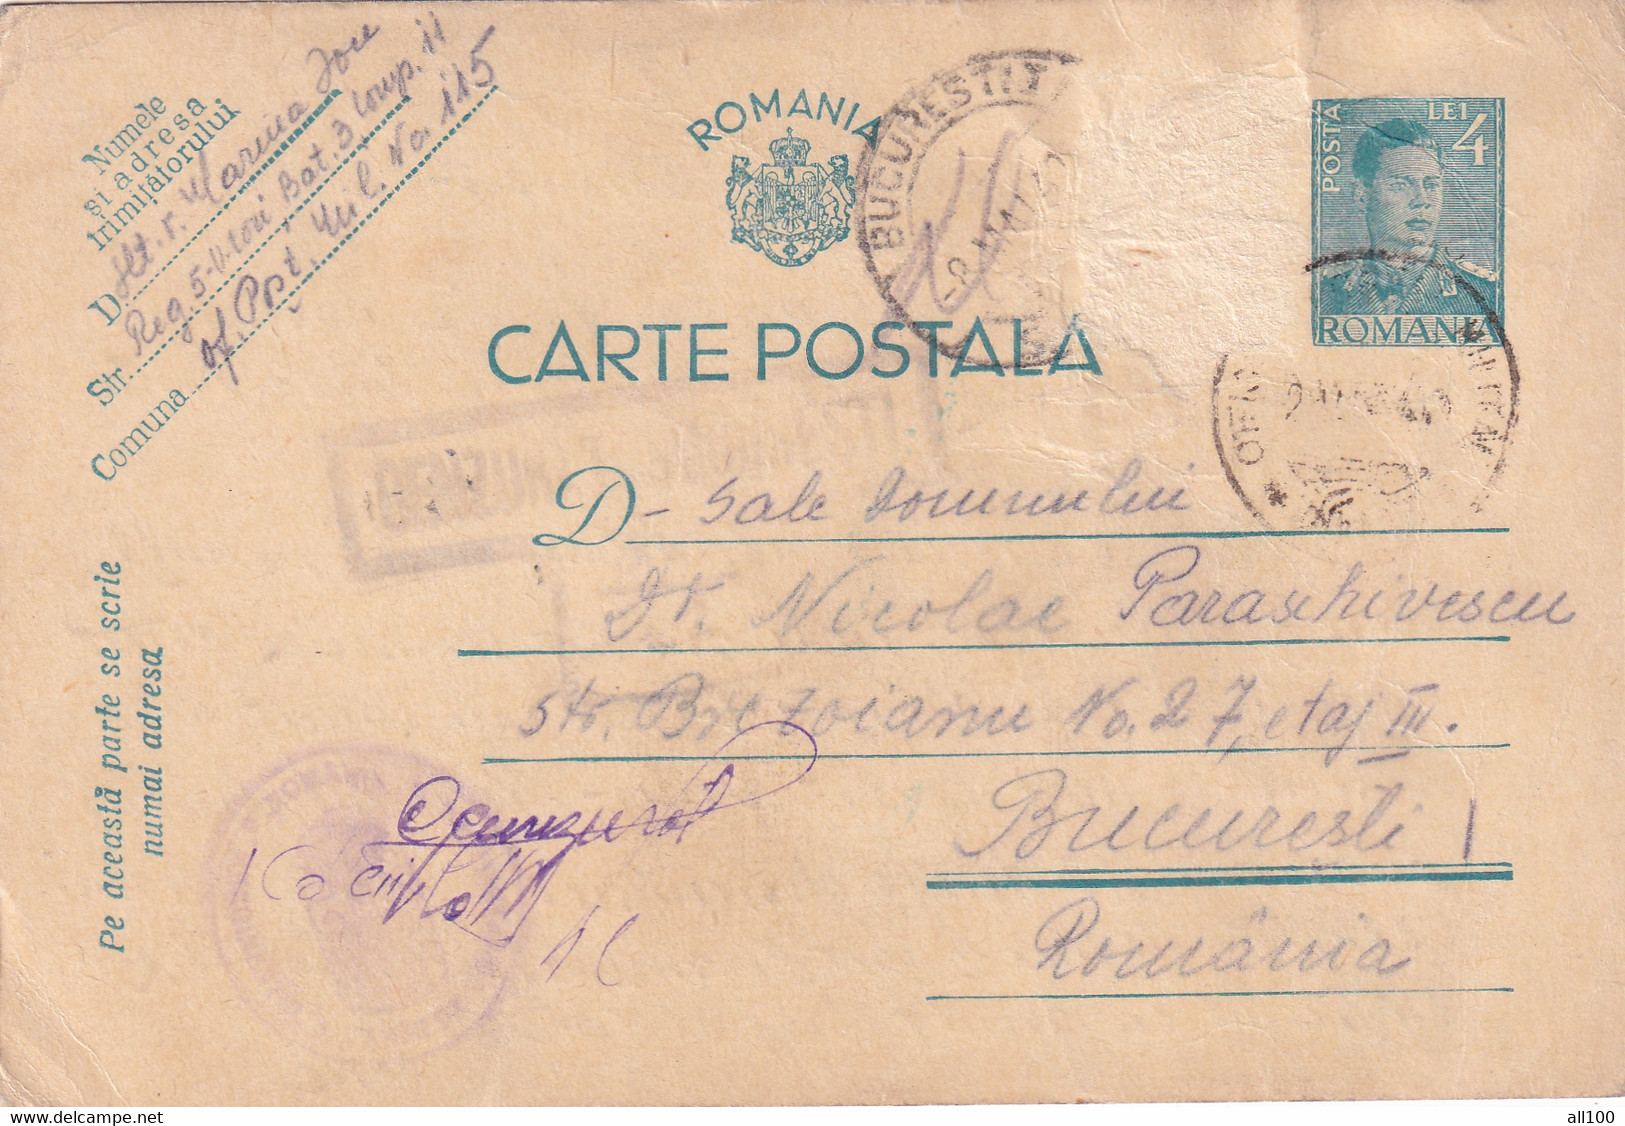 A16411 - MILITARY LETTER CENZURAT CENZORED KING MICHAEL 4 LEI POSTAL STATIONERY 1942 - World War 2 Letters